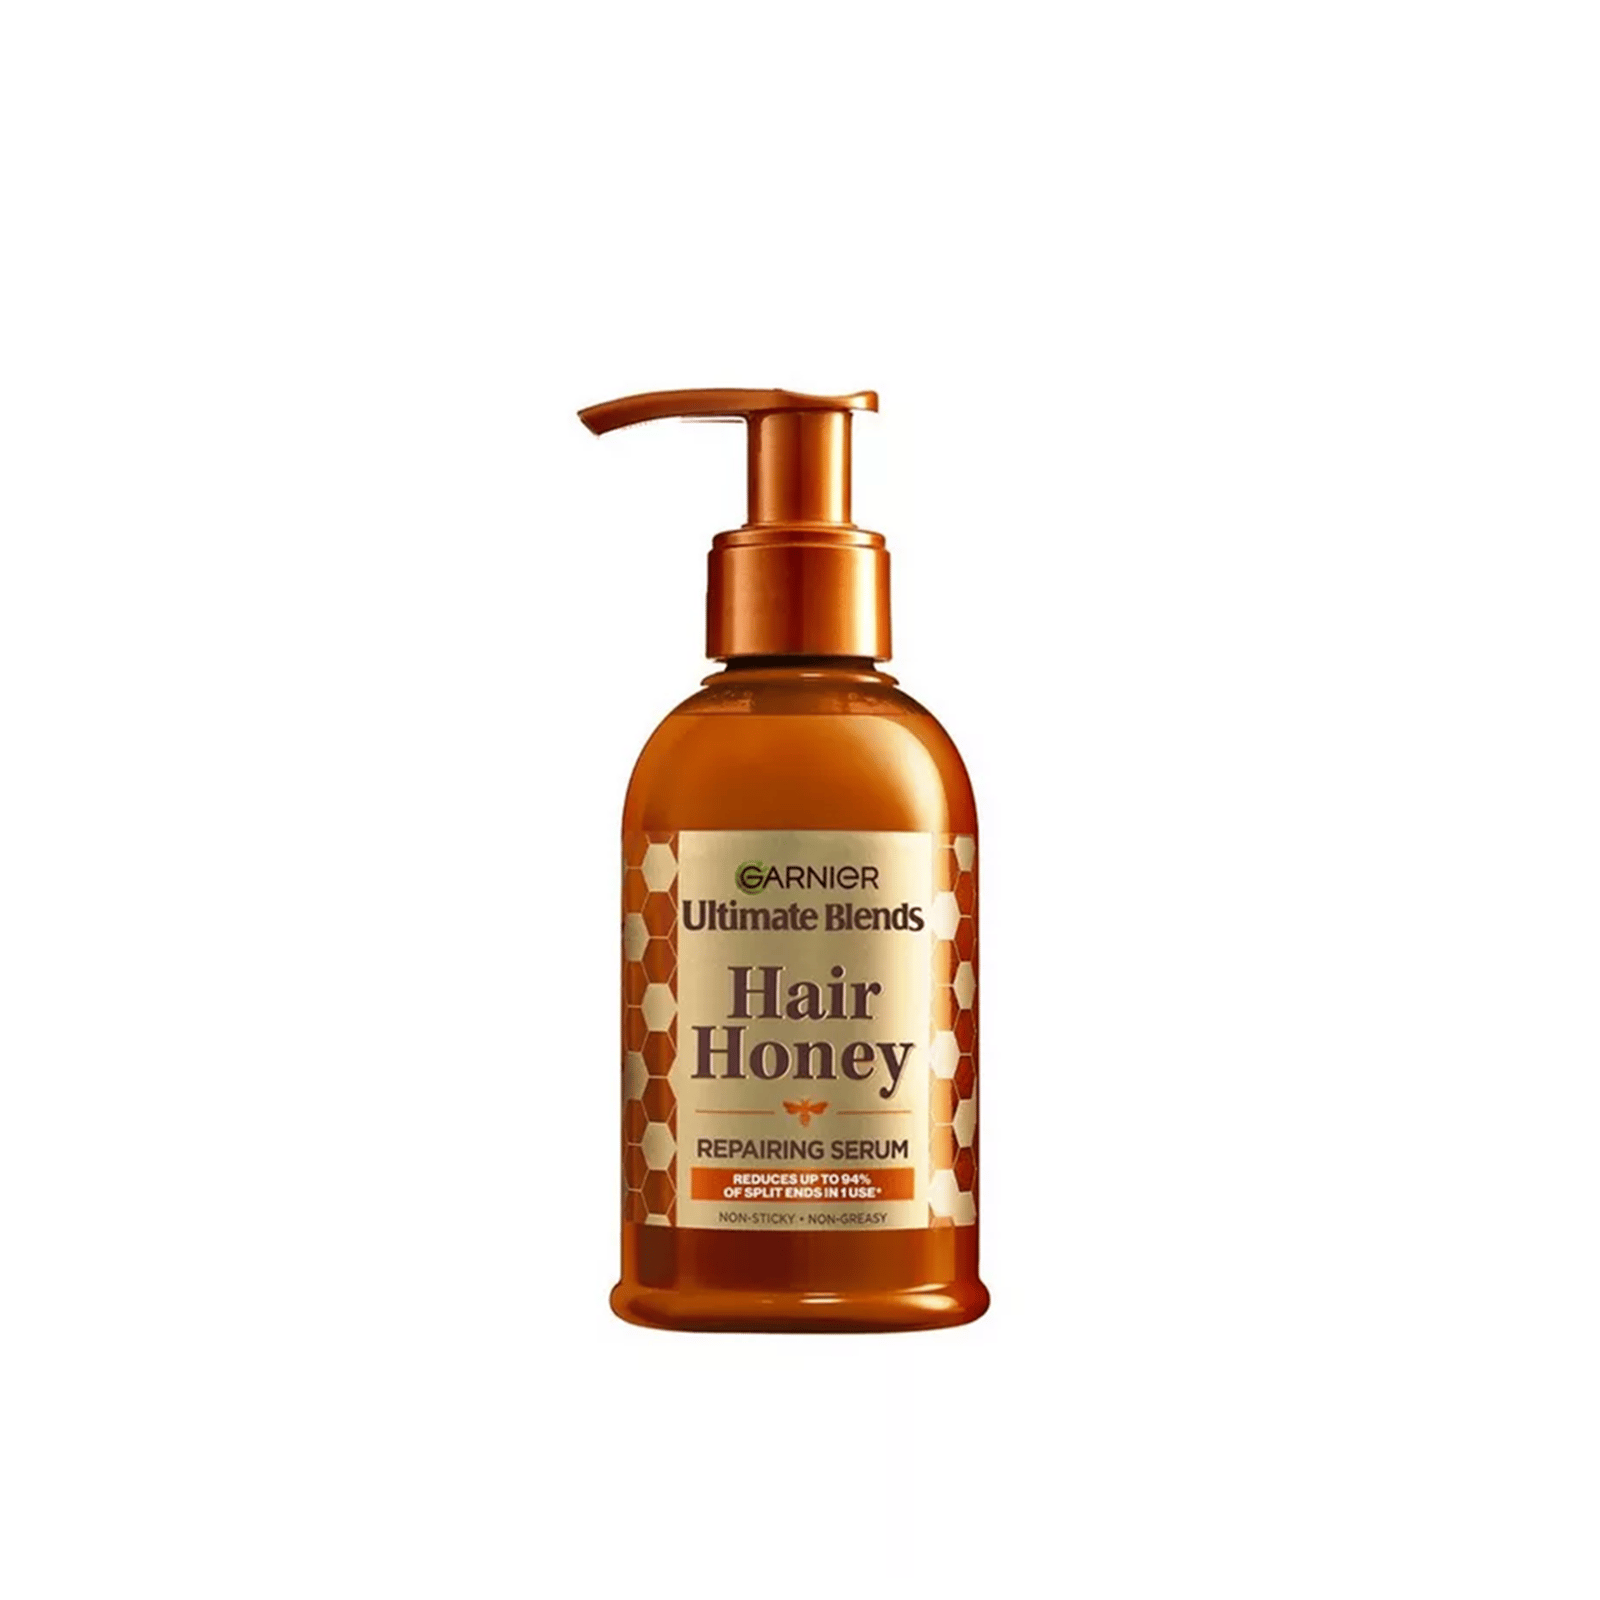 Garnier Ultimate Blends Hair Honey Repairing Serum 115ml